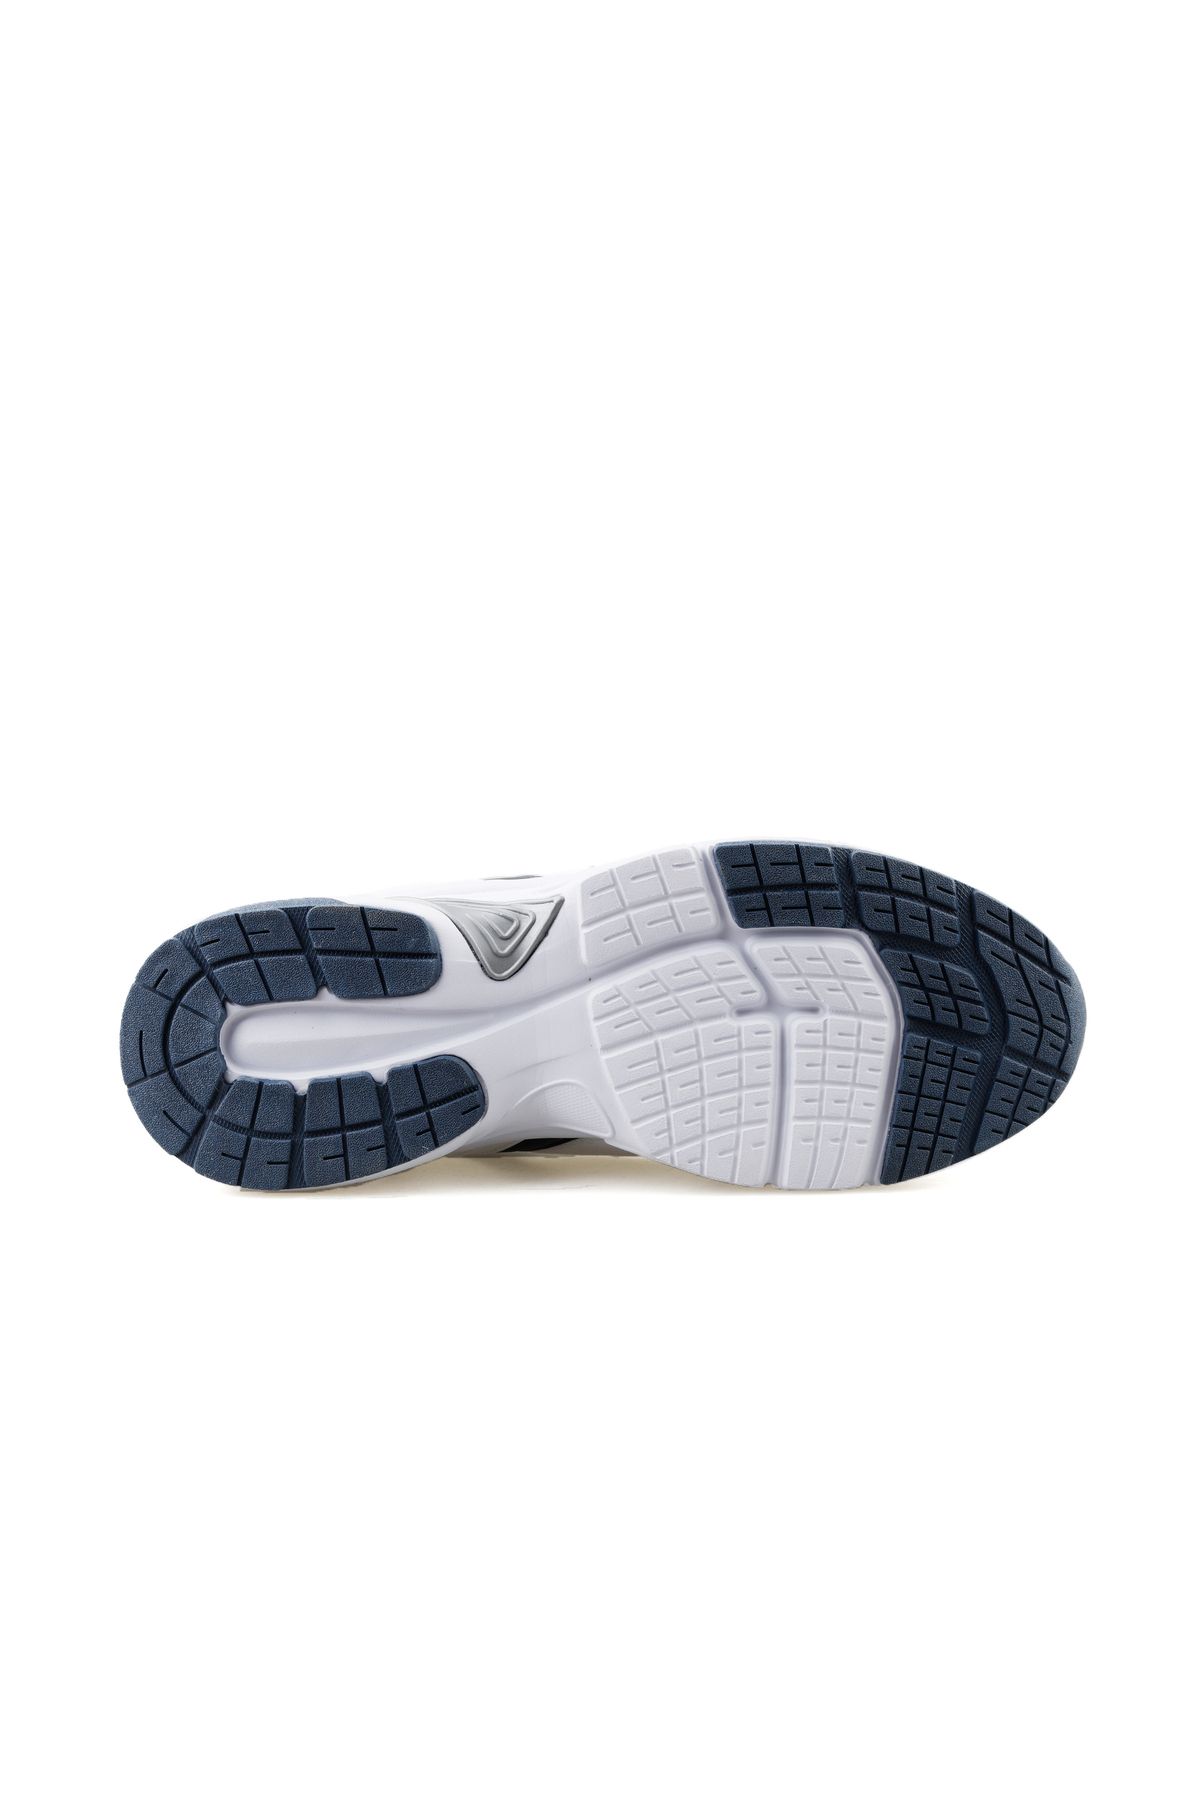 hummel کفش روزانه مردان HML Vera 900527-0587 سفید